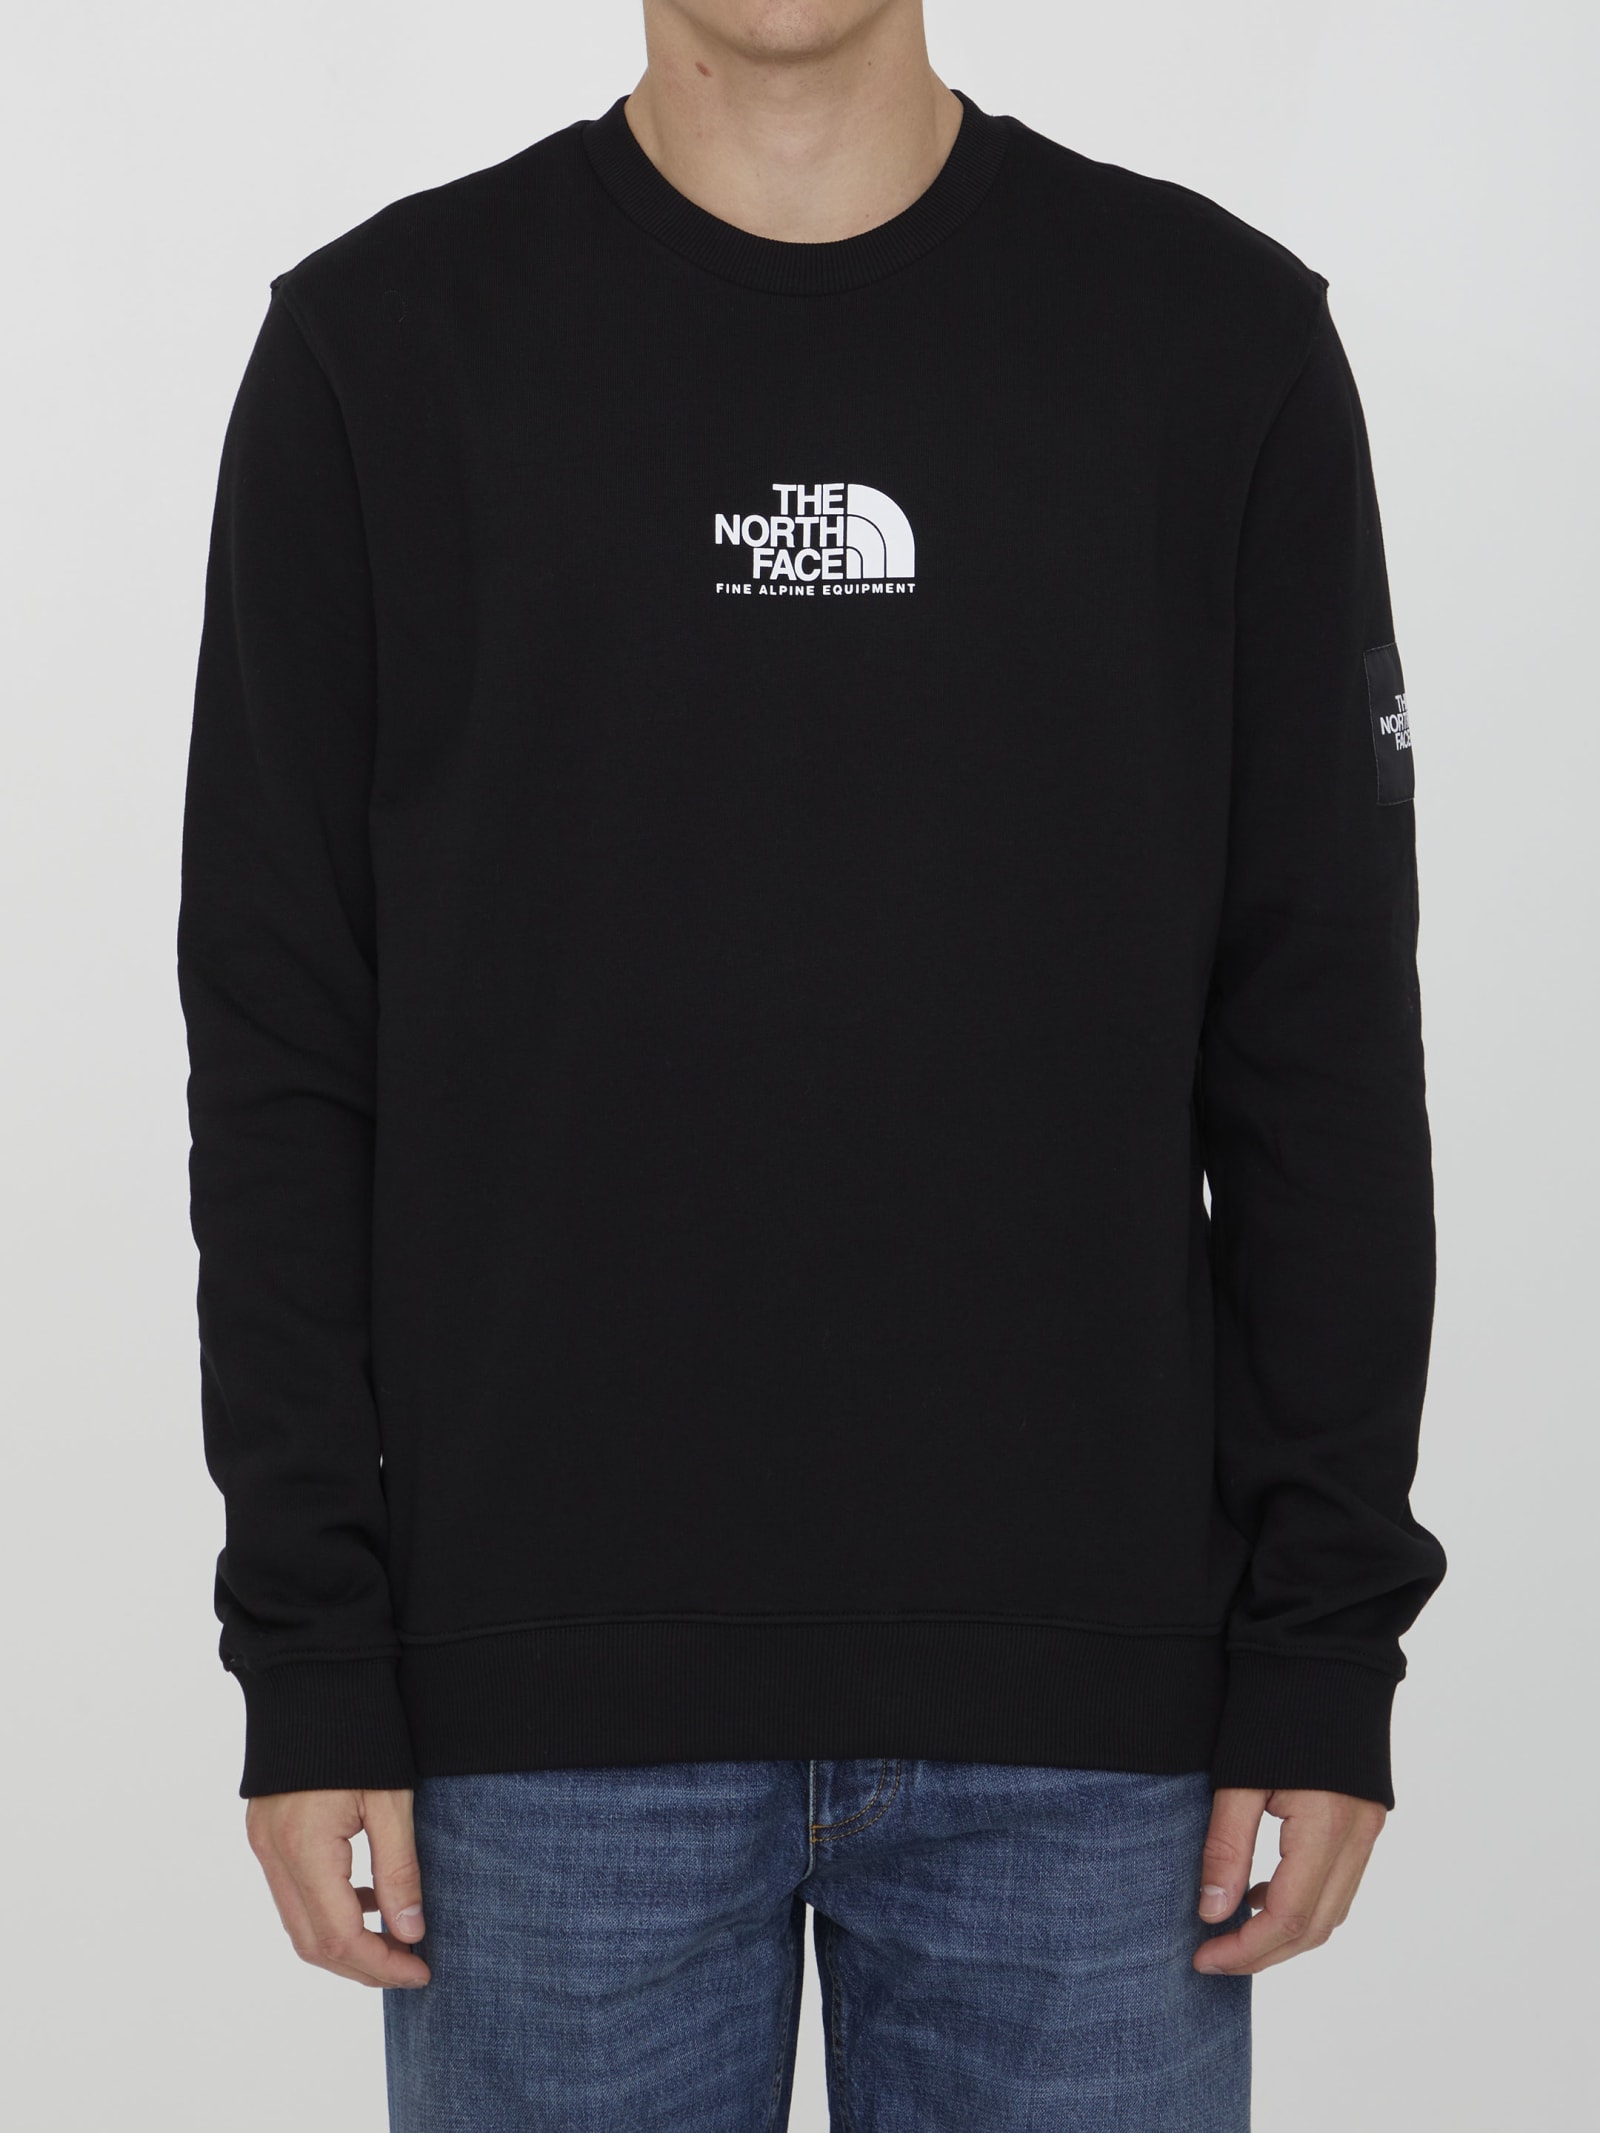 The North Face Black Cotton Sweatshirt